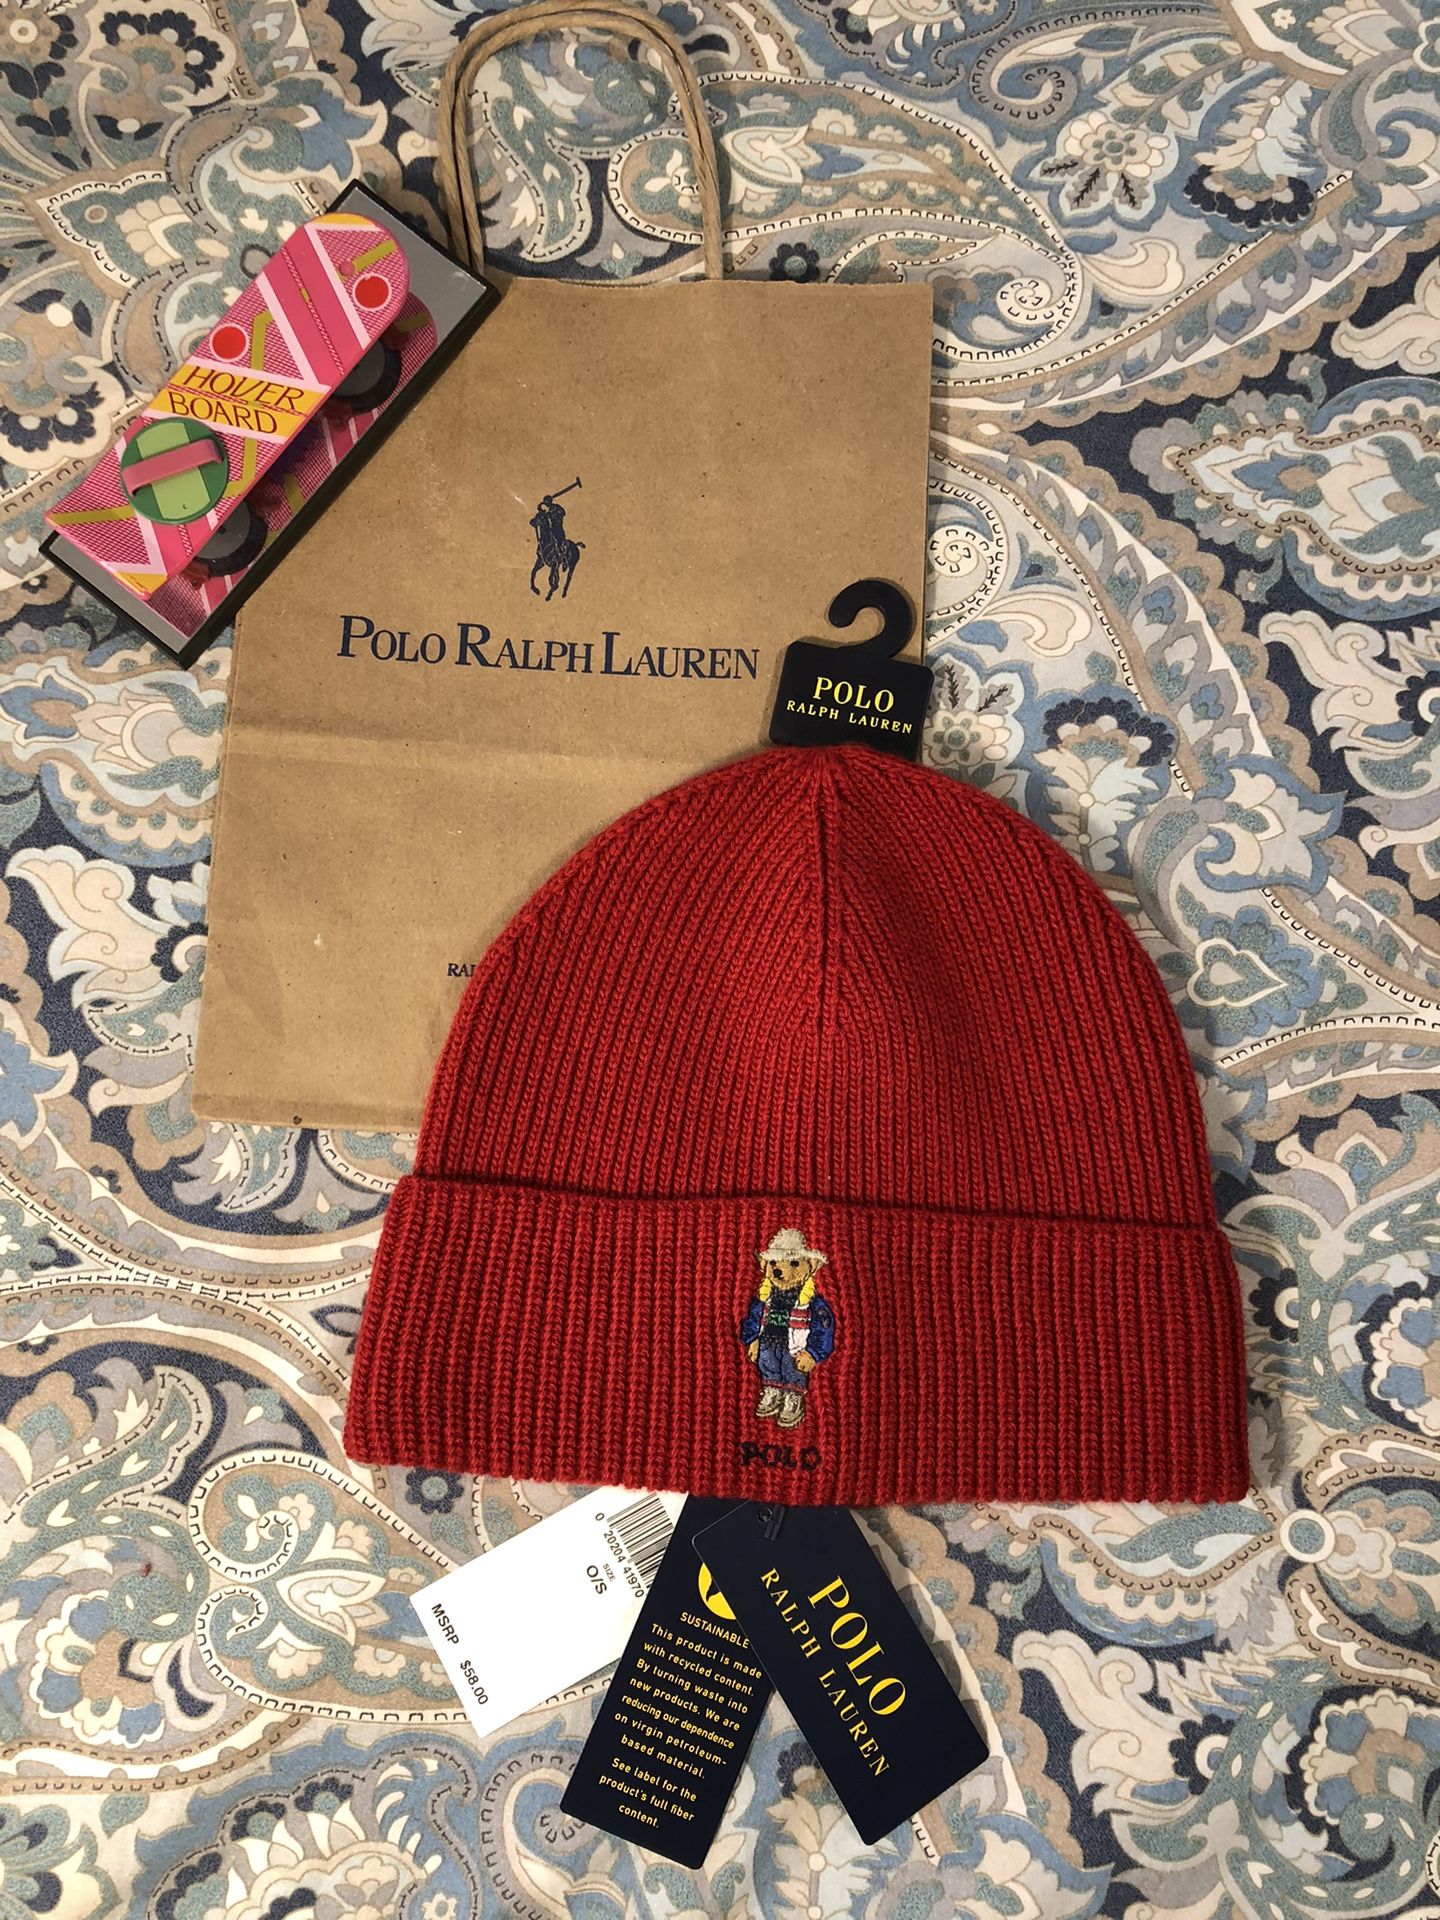 Polo Ralph Holiday Bear Terrain Southwestern Knit Hat Beanie for Sale in Dallas, TX - OfferUp